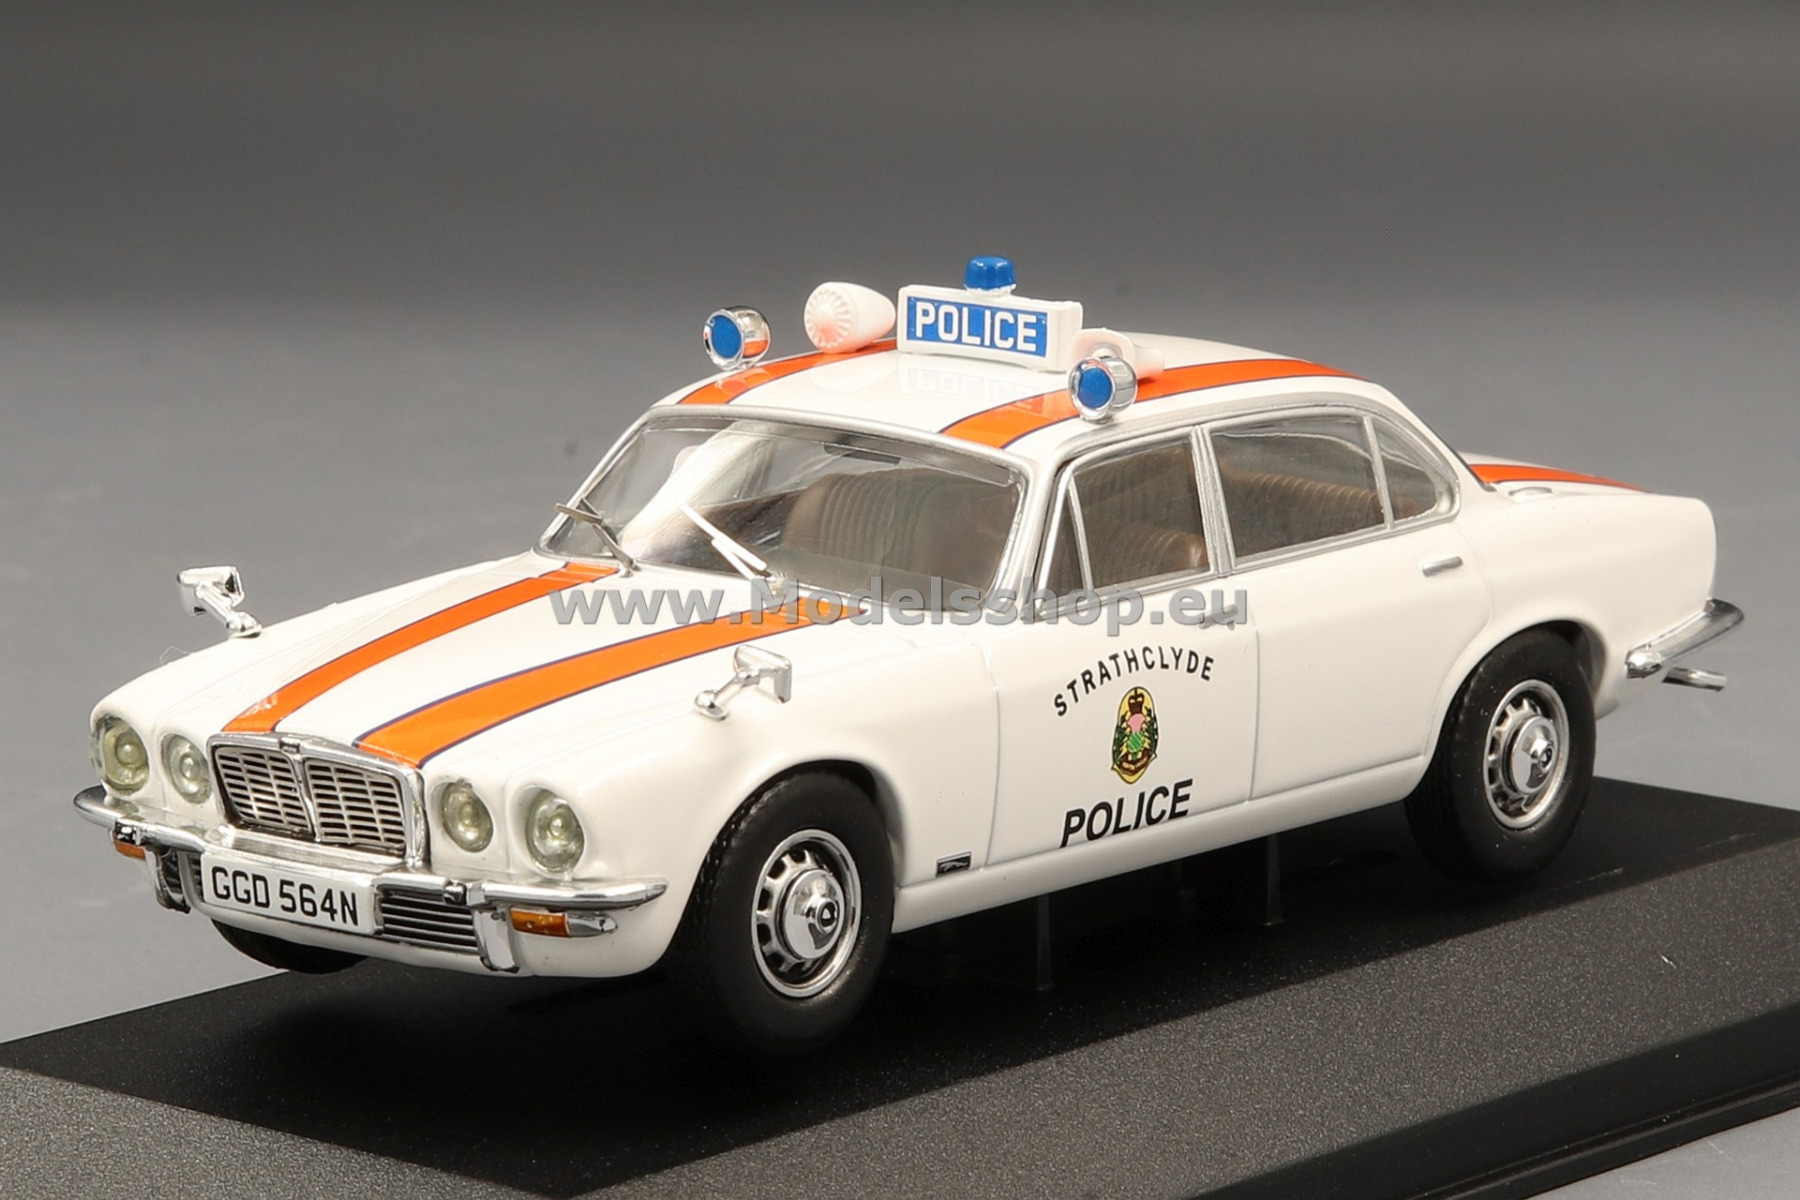 Jaguar XJ6 Series 2 4.2, RHD, Strathclyde Police, 1975, police (GB)